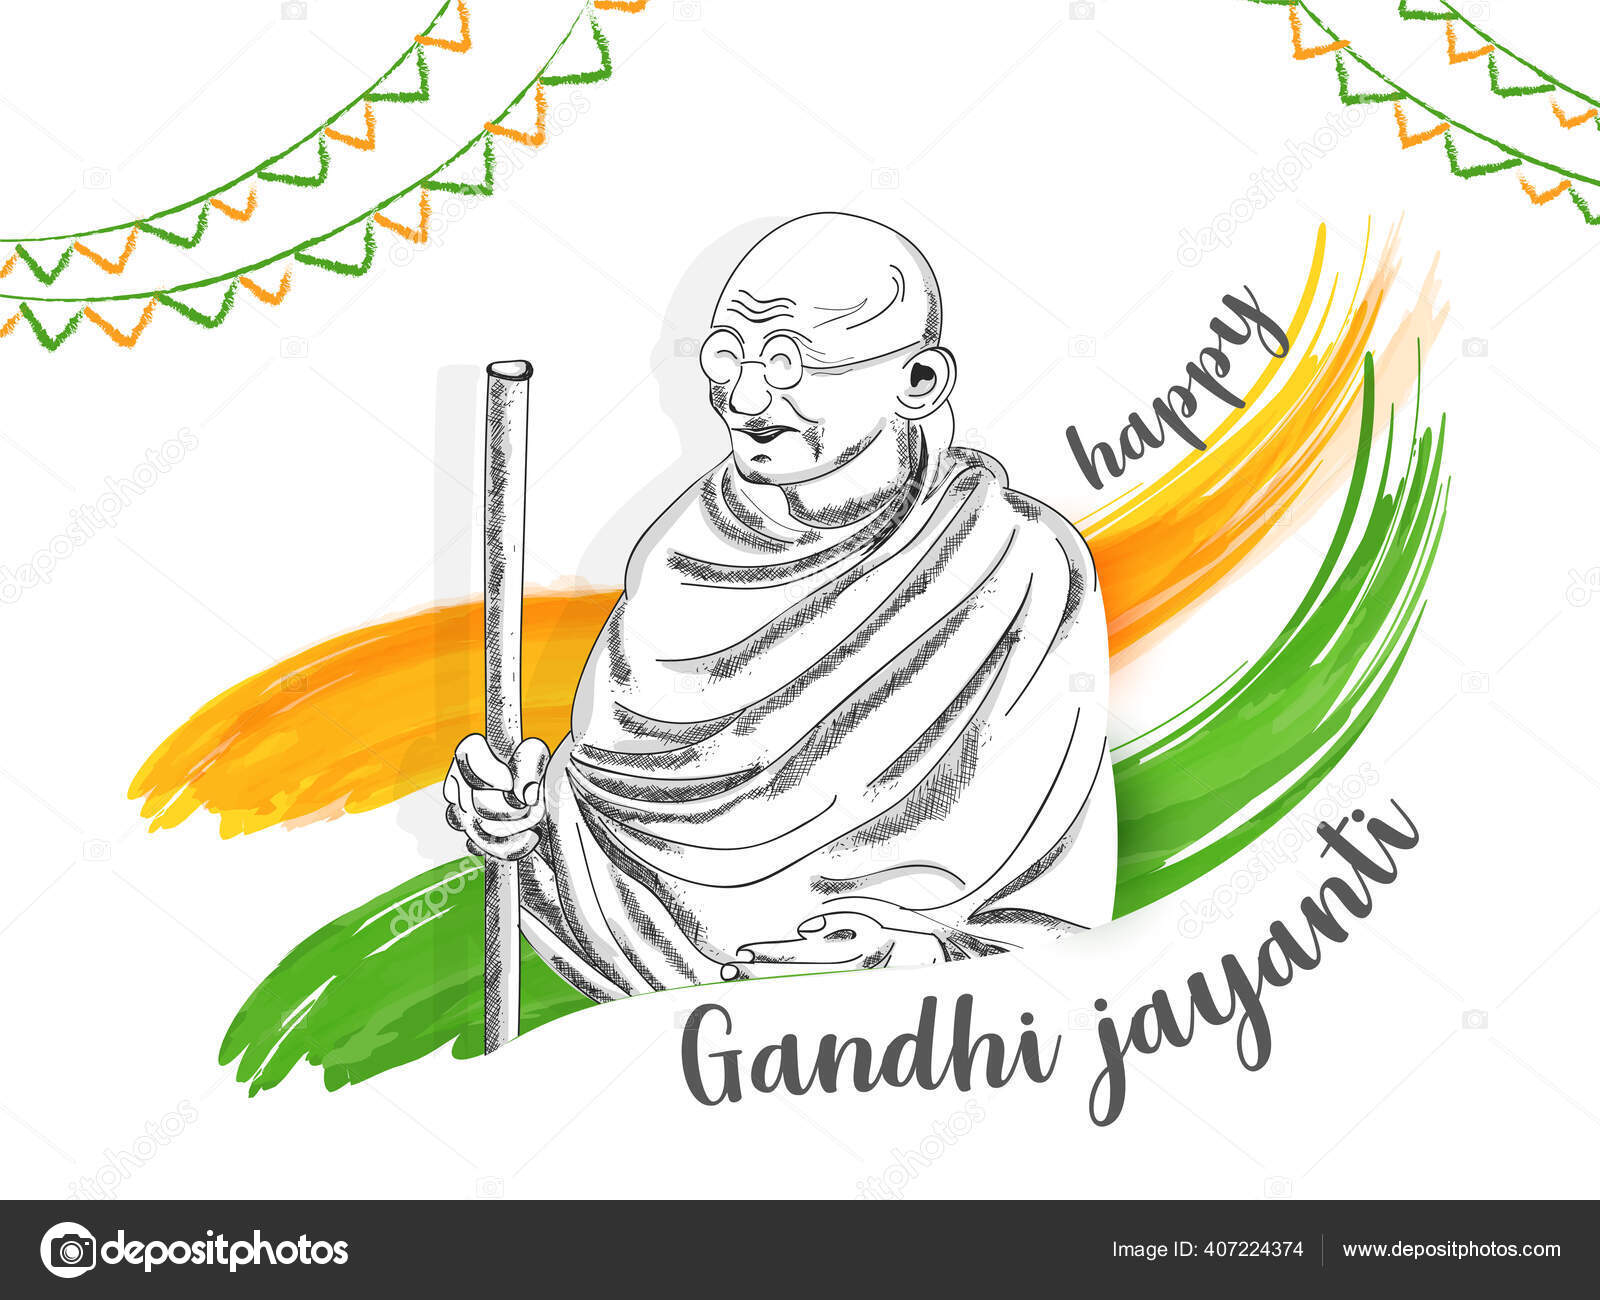 Gandhi jayanti – India NCC-saigonsouth.com.vn